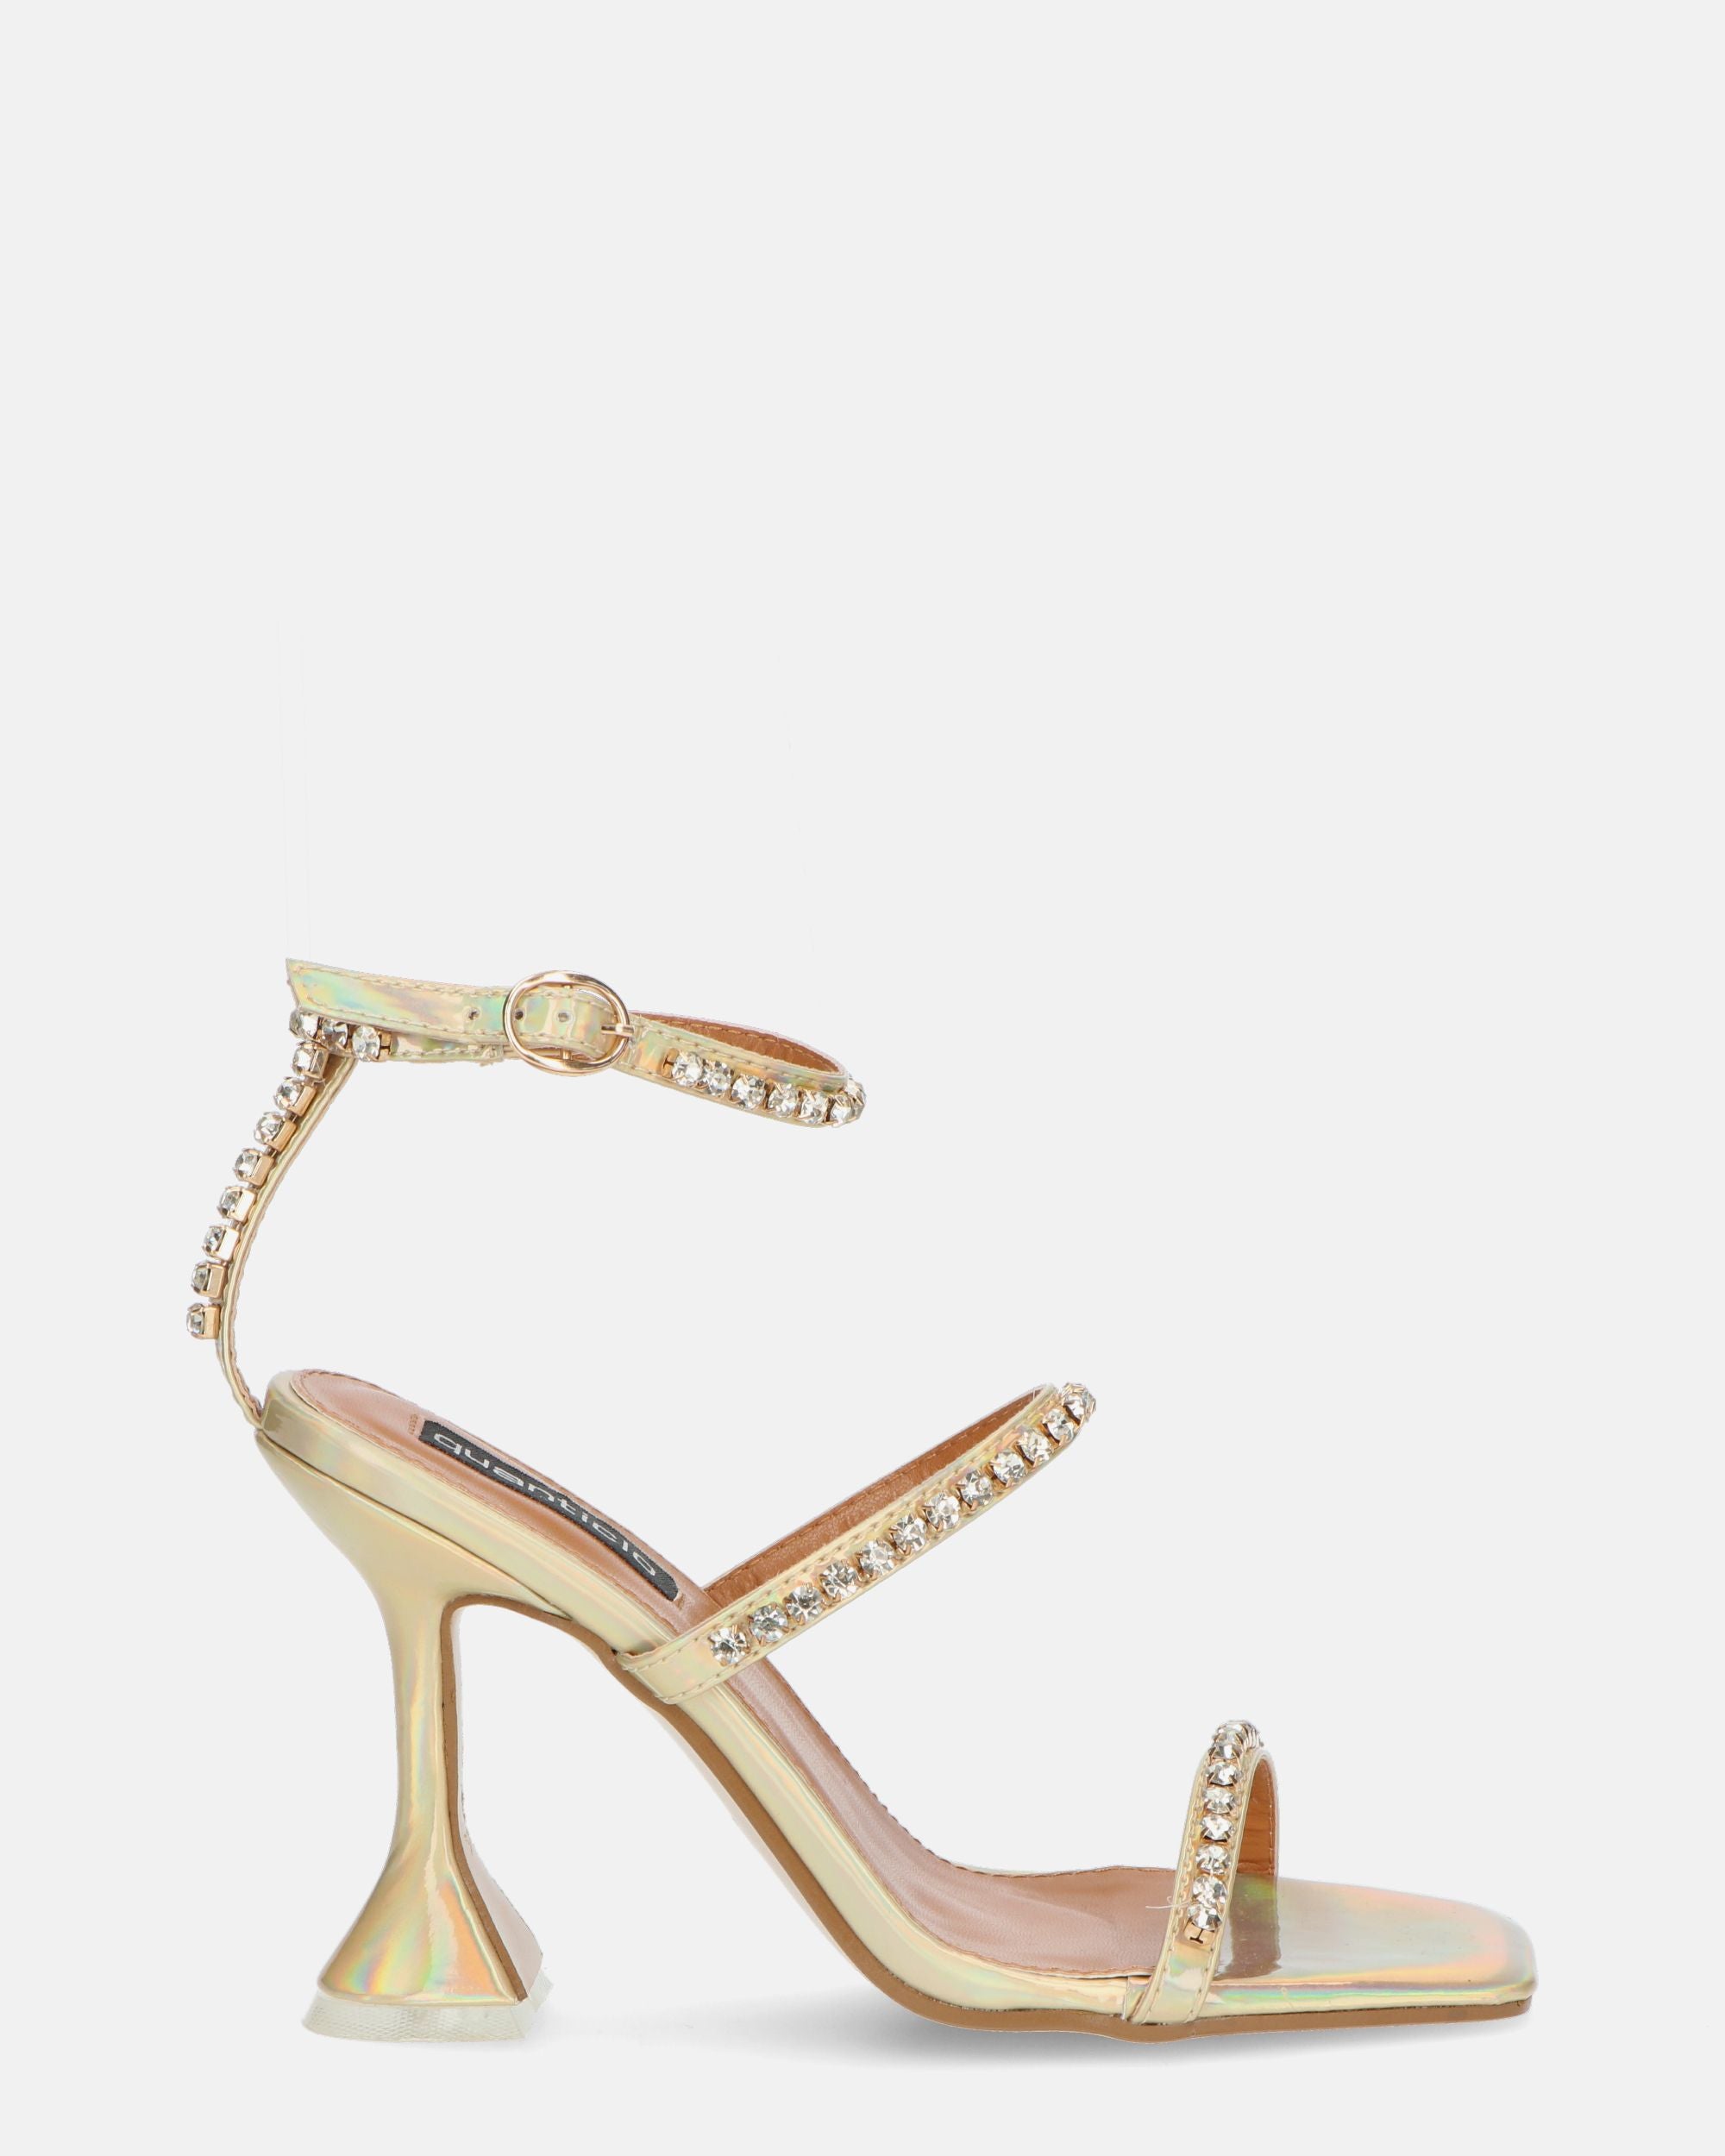 TAHLA - gold sandal heel with gems